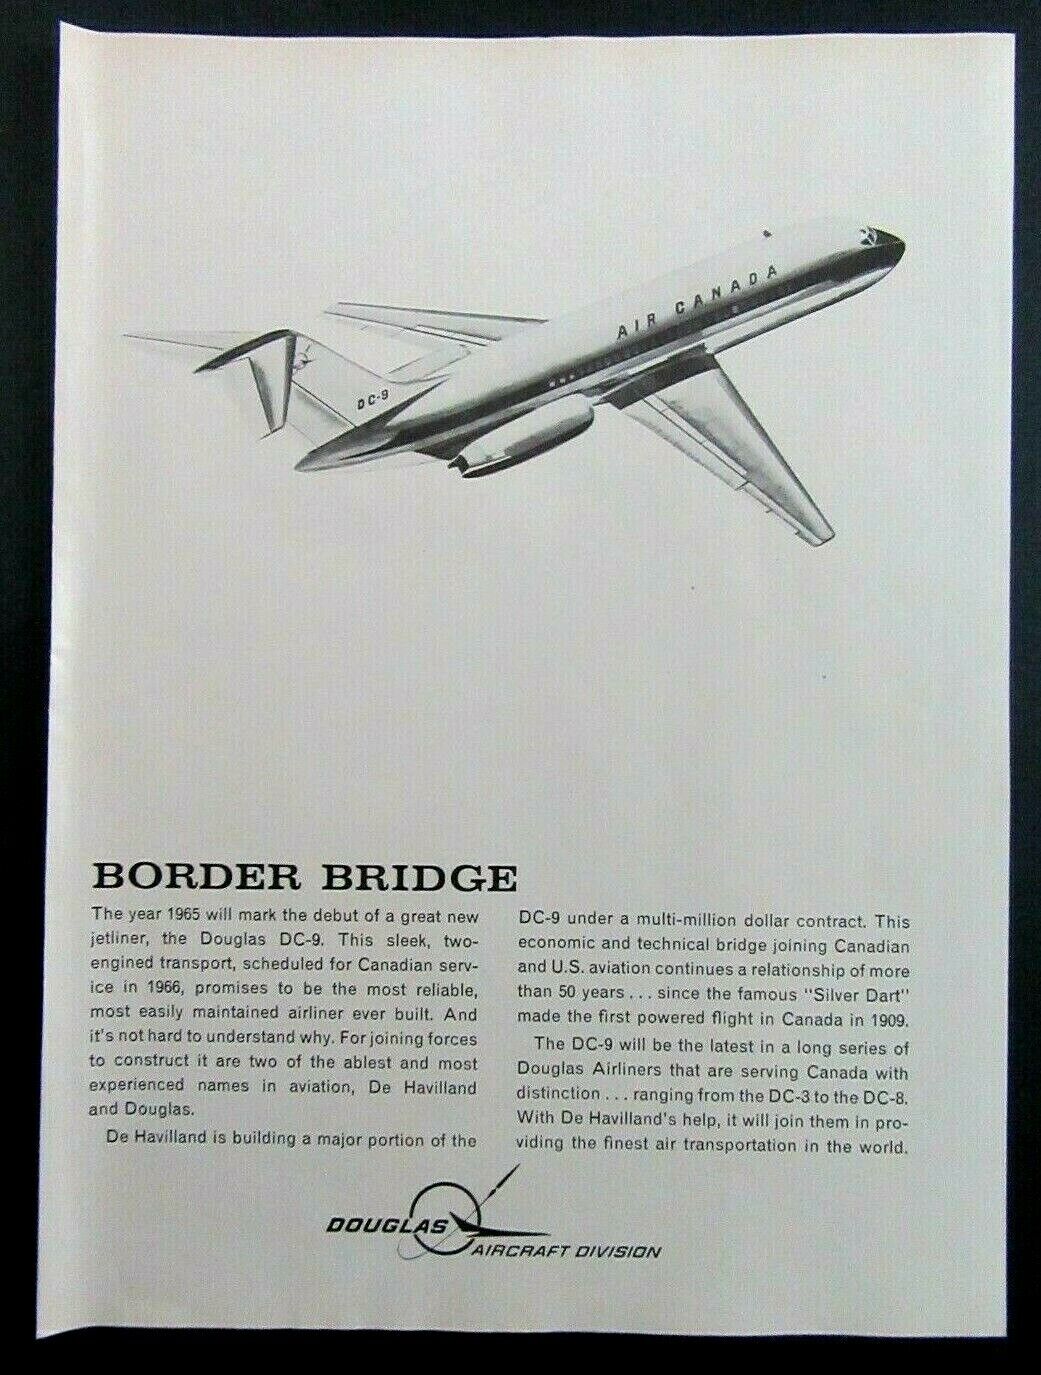 1964 DOUGLAS AIRCRAFT DIVISION Douglas DC-9 Jetliner Canadian Magazine Ad